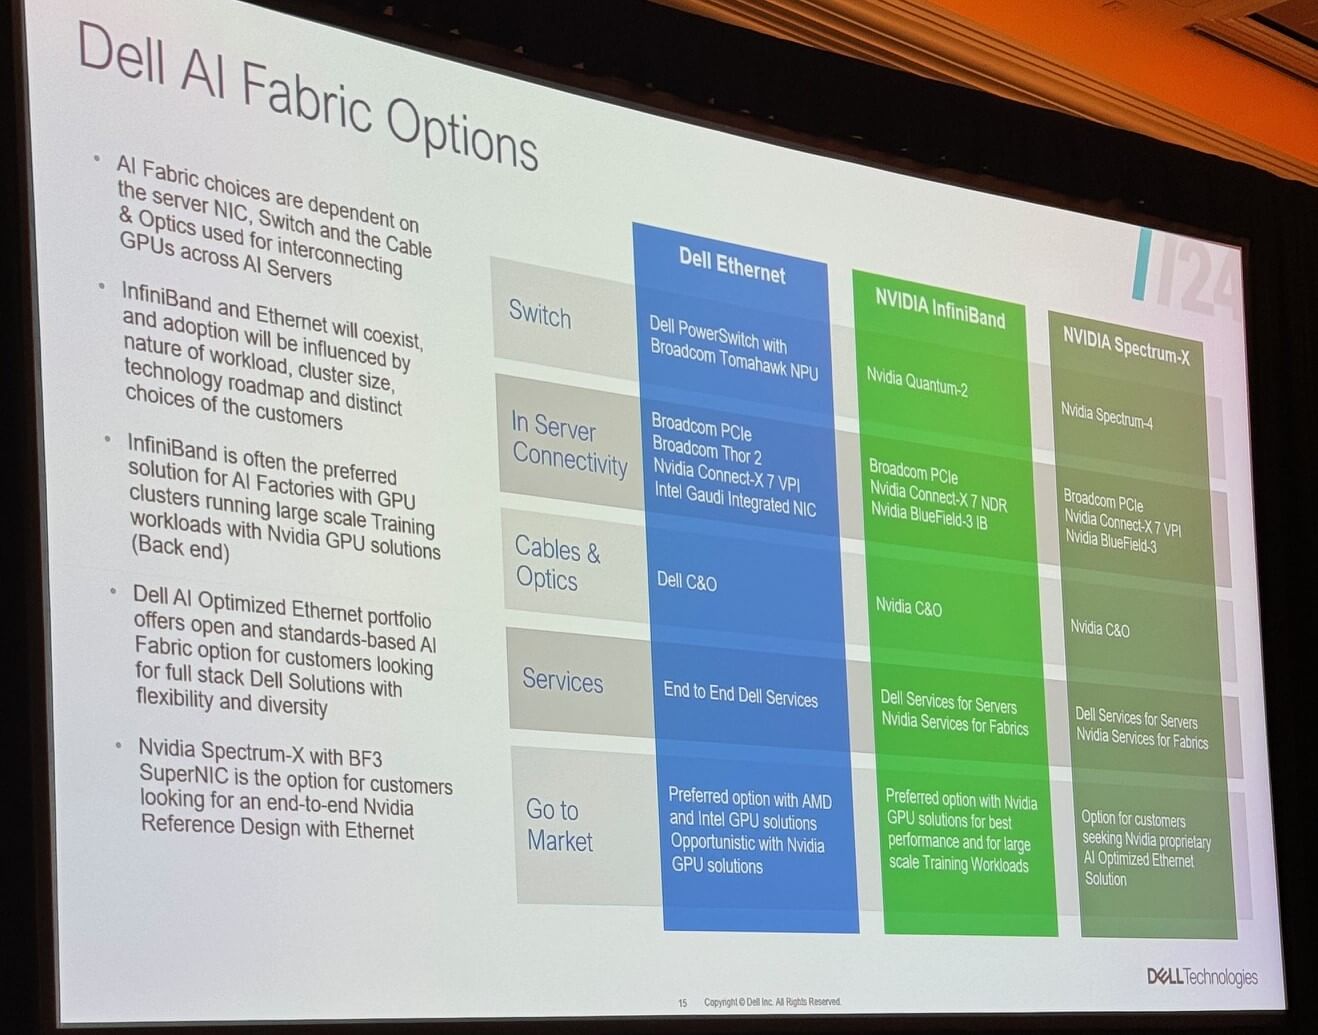 Dell AI Fabric Options